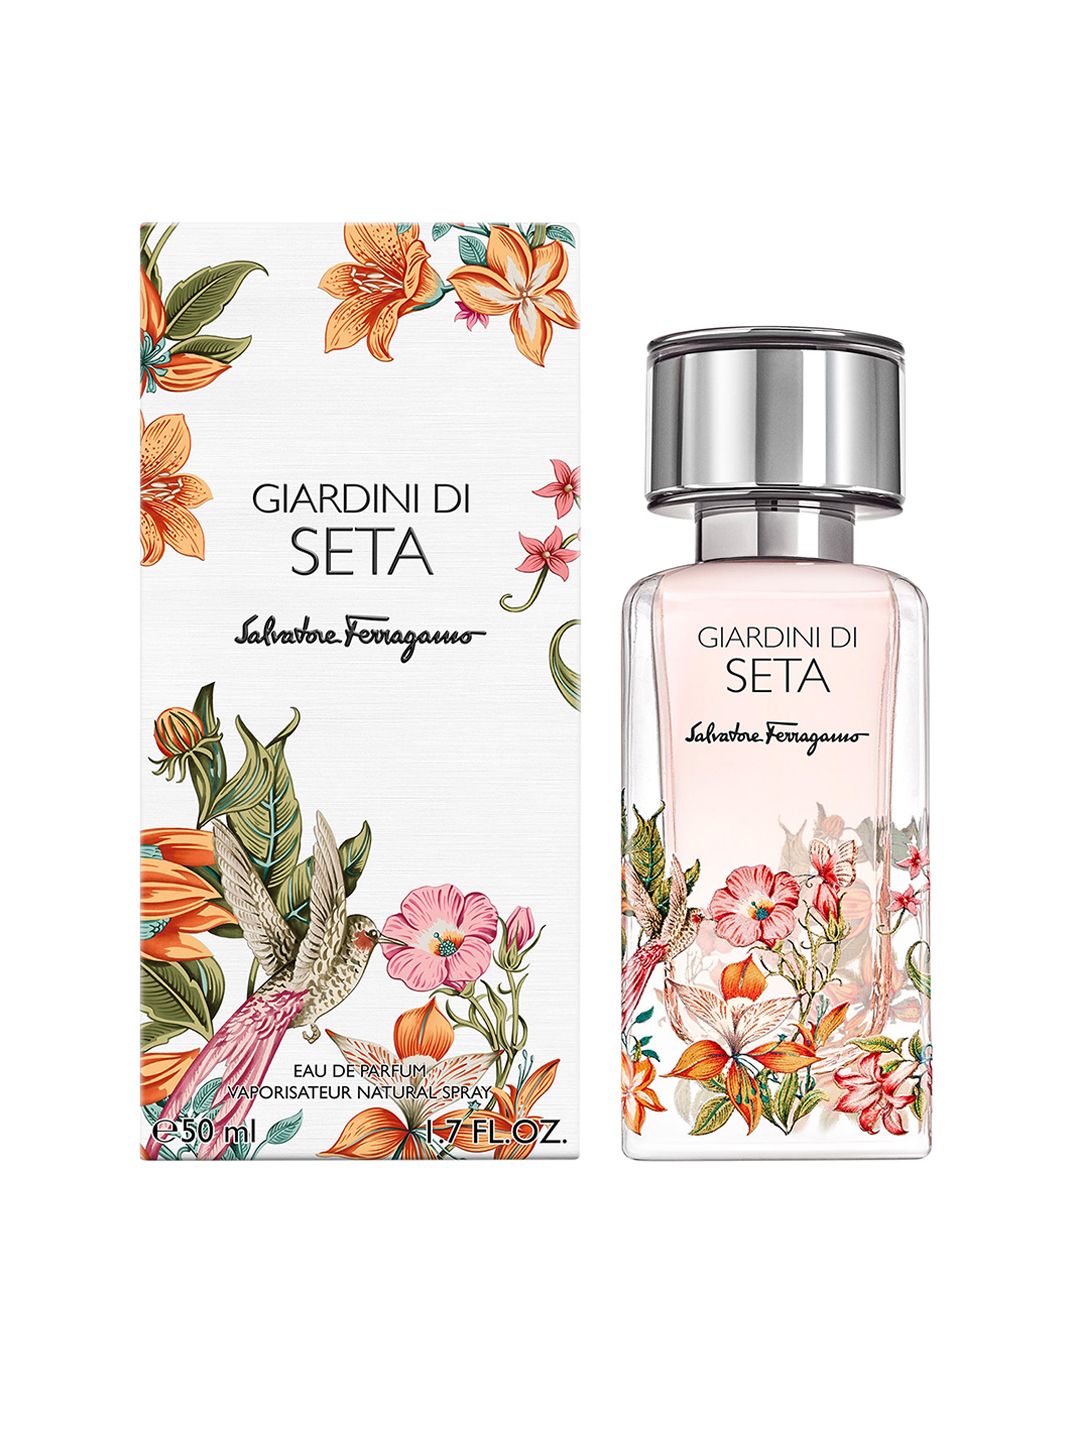 SALVATORE FERRAGAMO Giardini Di Seta Eau De Perfume-50ml Price in India